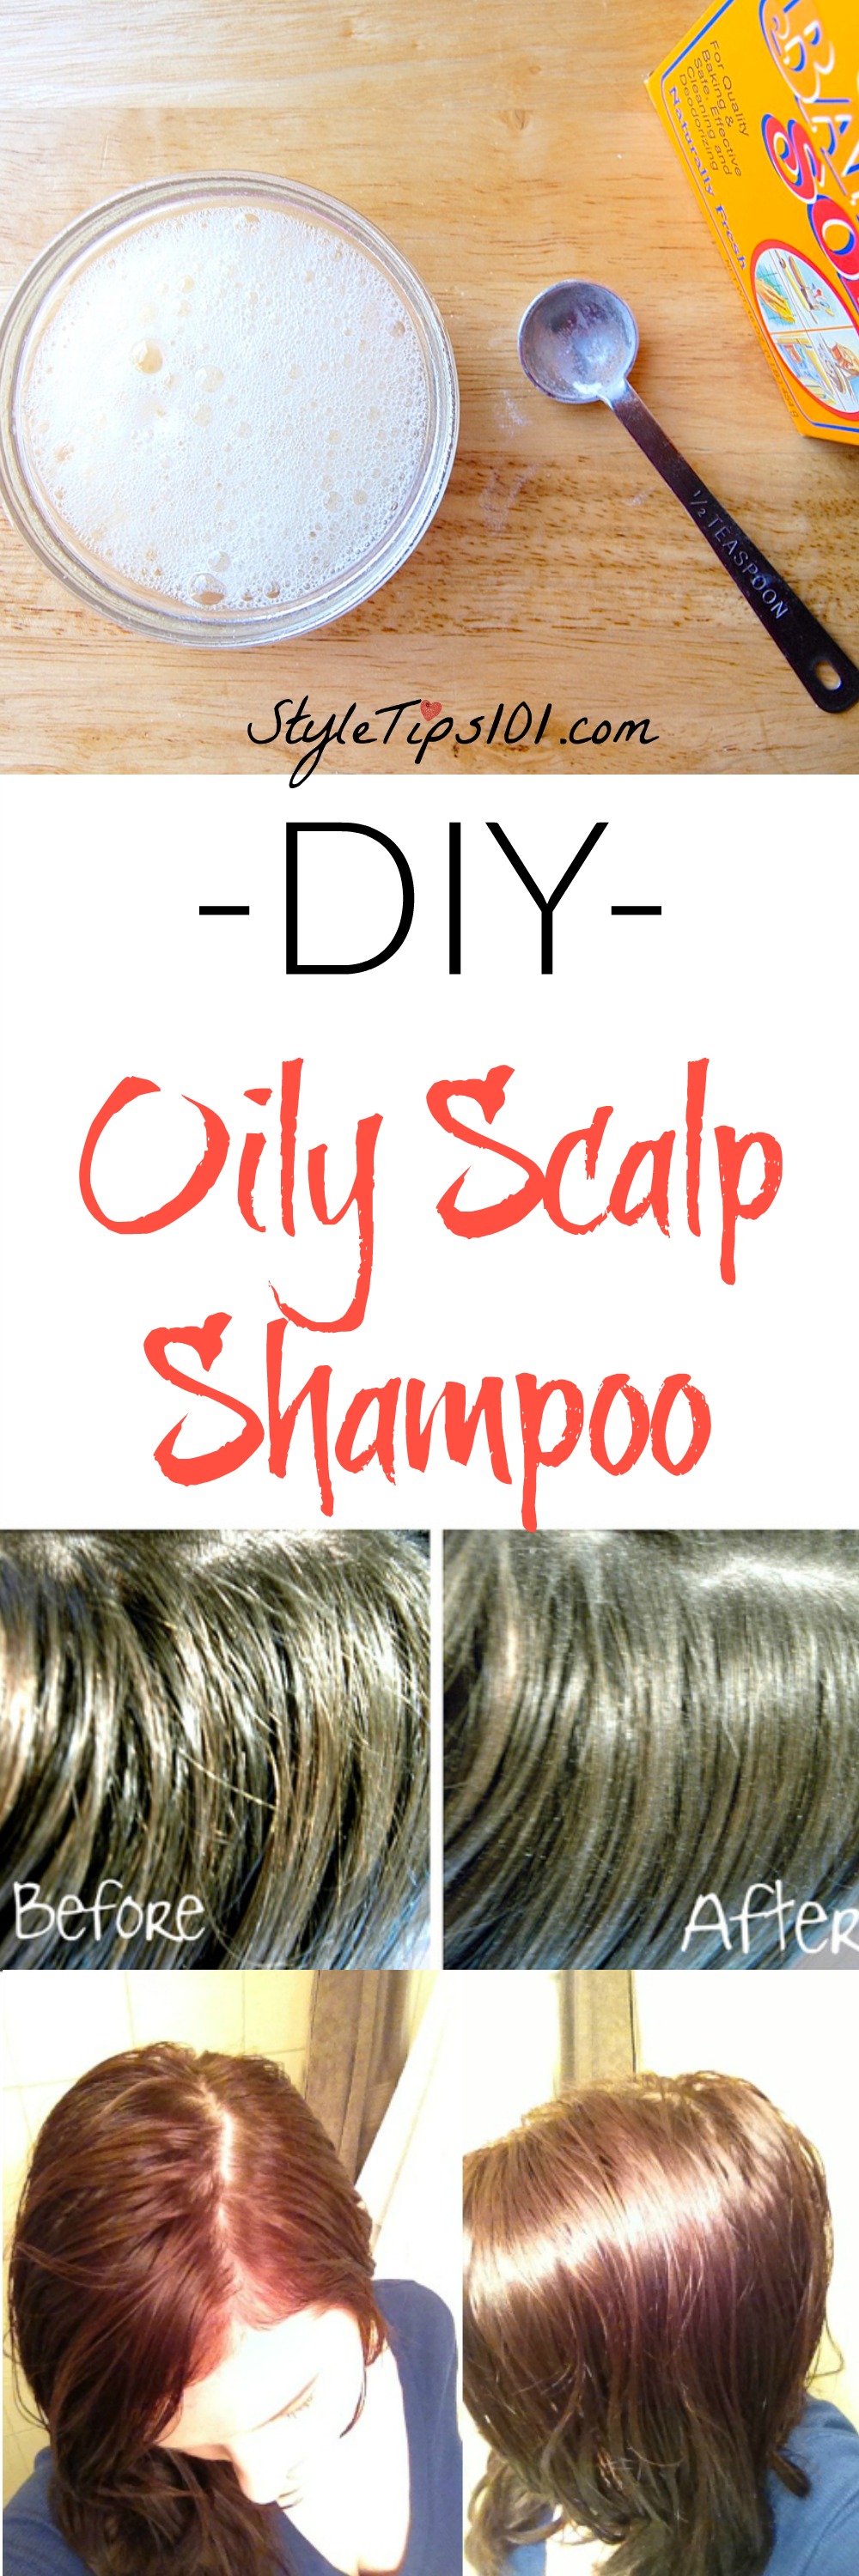 DIY Oily Scalp Shampoo